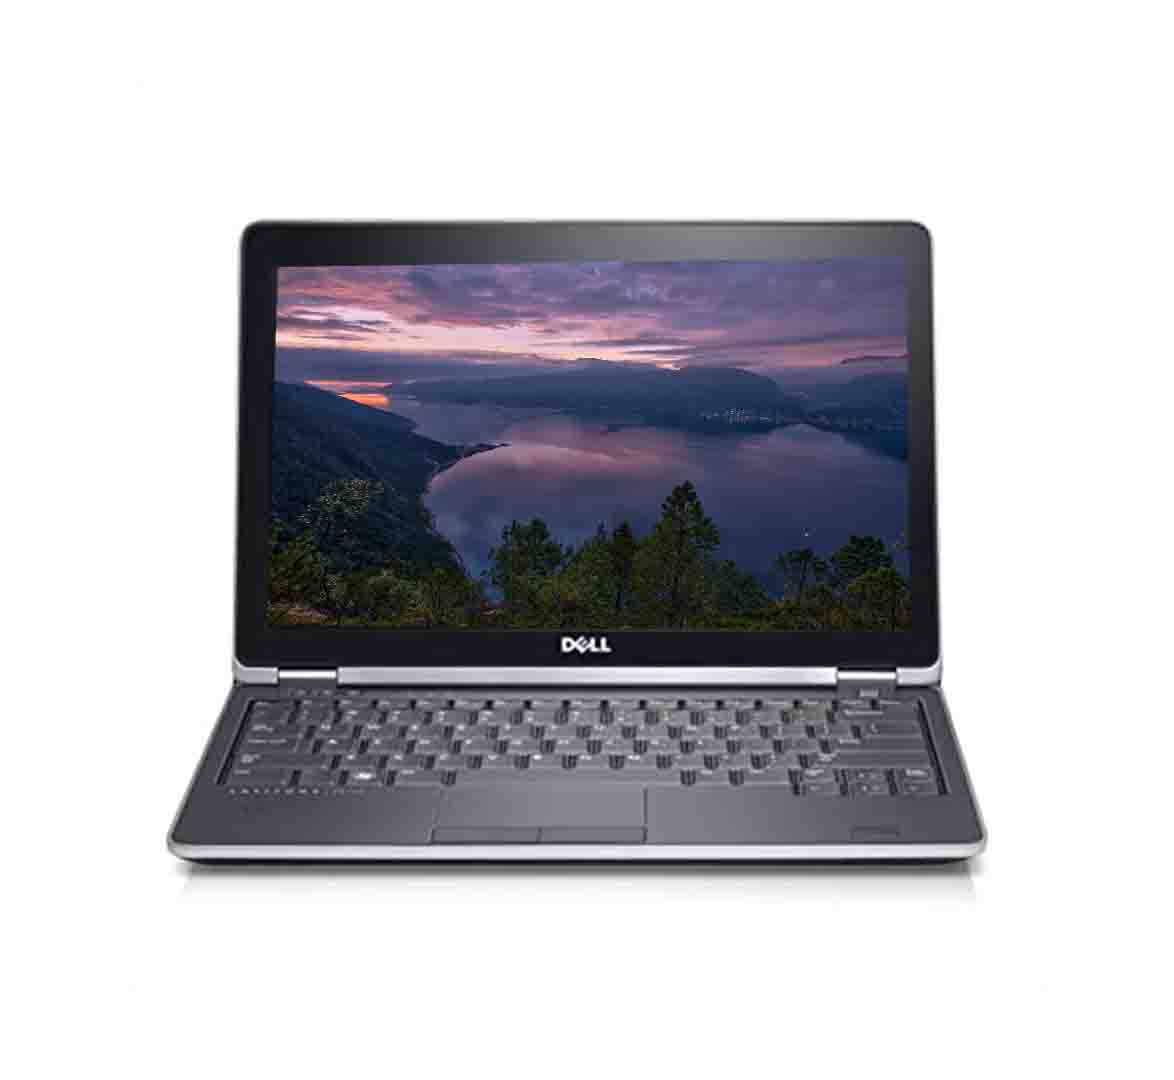 Dell Latitude E6230 Business Laptop, Intel Core i5-3rd Generation CPU, 4GB RAM, 500GB HDD, 12.5 inch Display, Windows 10 Pro, Refurbished Laptop